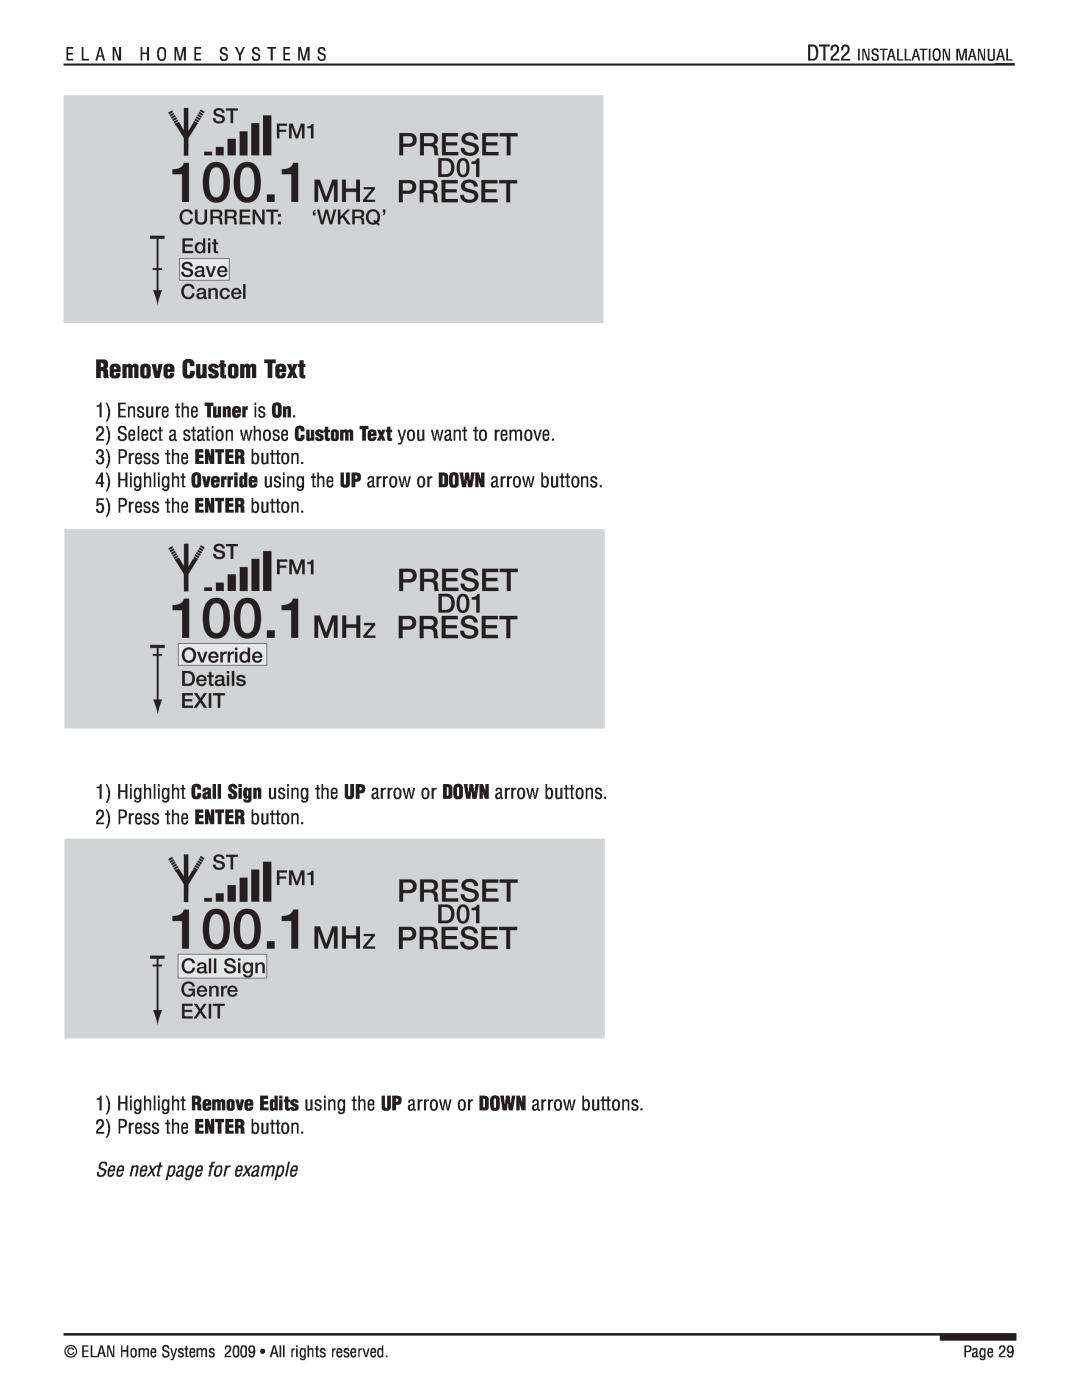 ELAN Home Systems DT22 manual Remove Custom Text, 100.1MHZ PRESET, Preset 